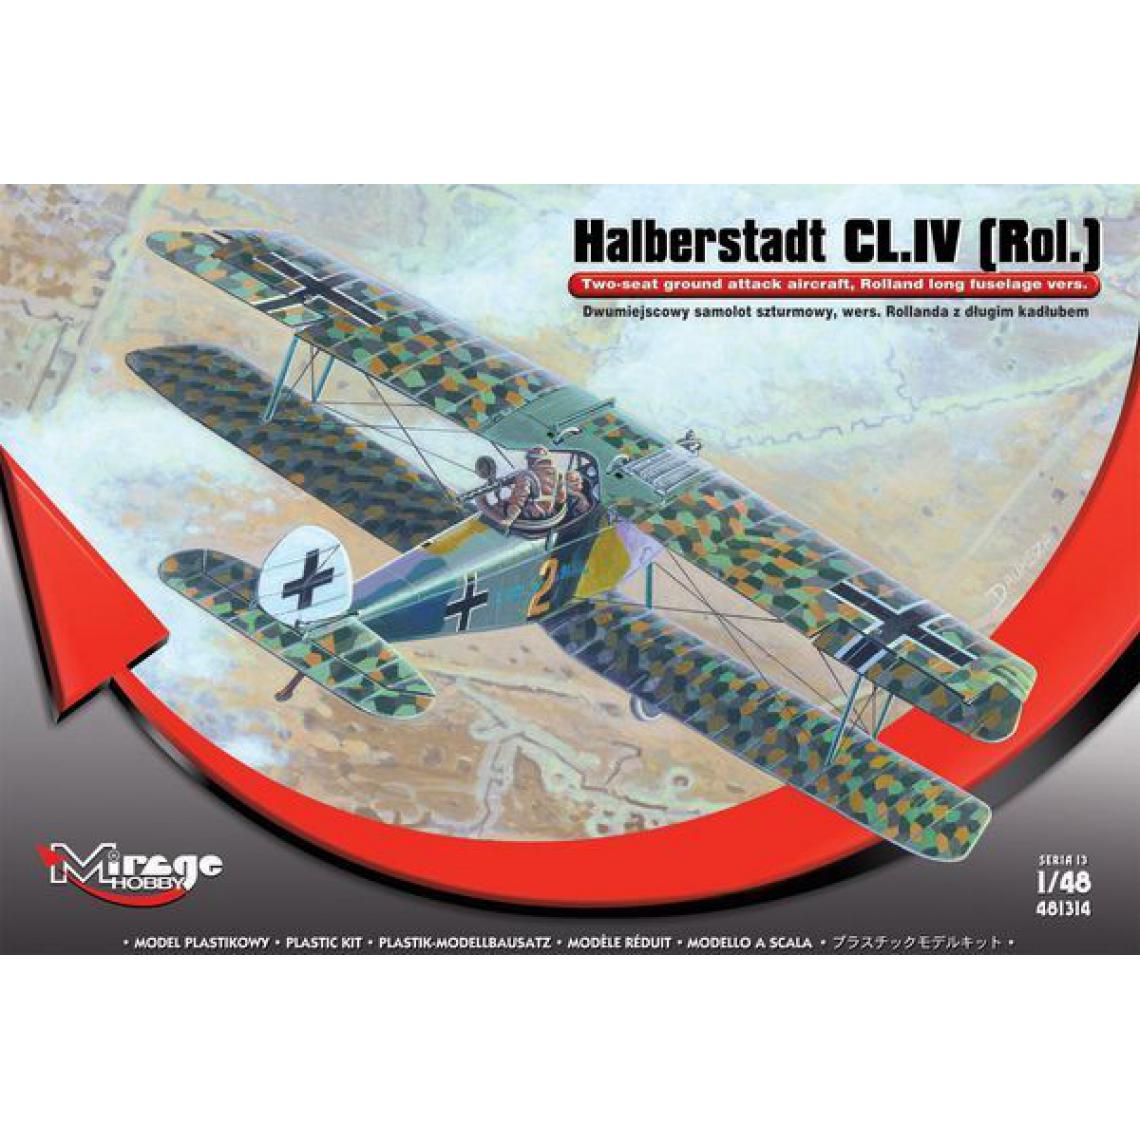 Mirage Hobby - Halberstadt CL.IV(Rol)Twi-seat ground su - 1:48e - Mirage Hobby - Accessoires et pièces